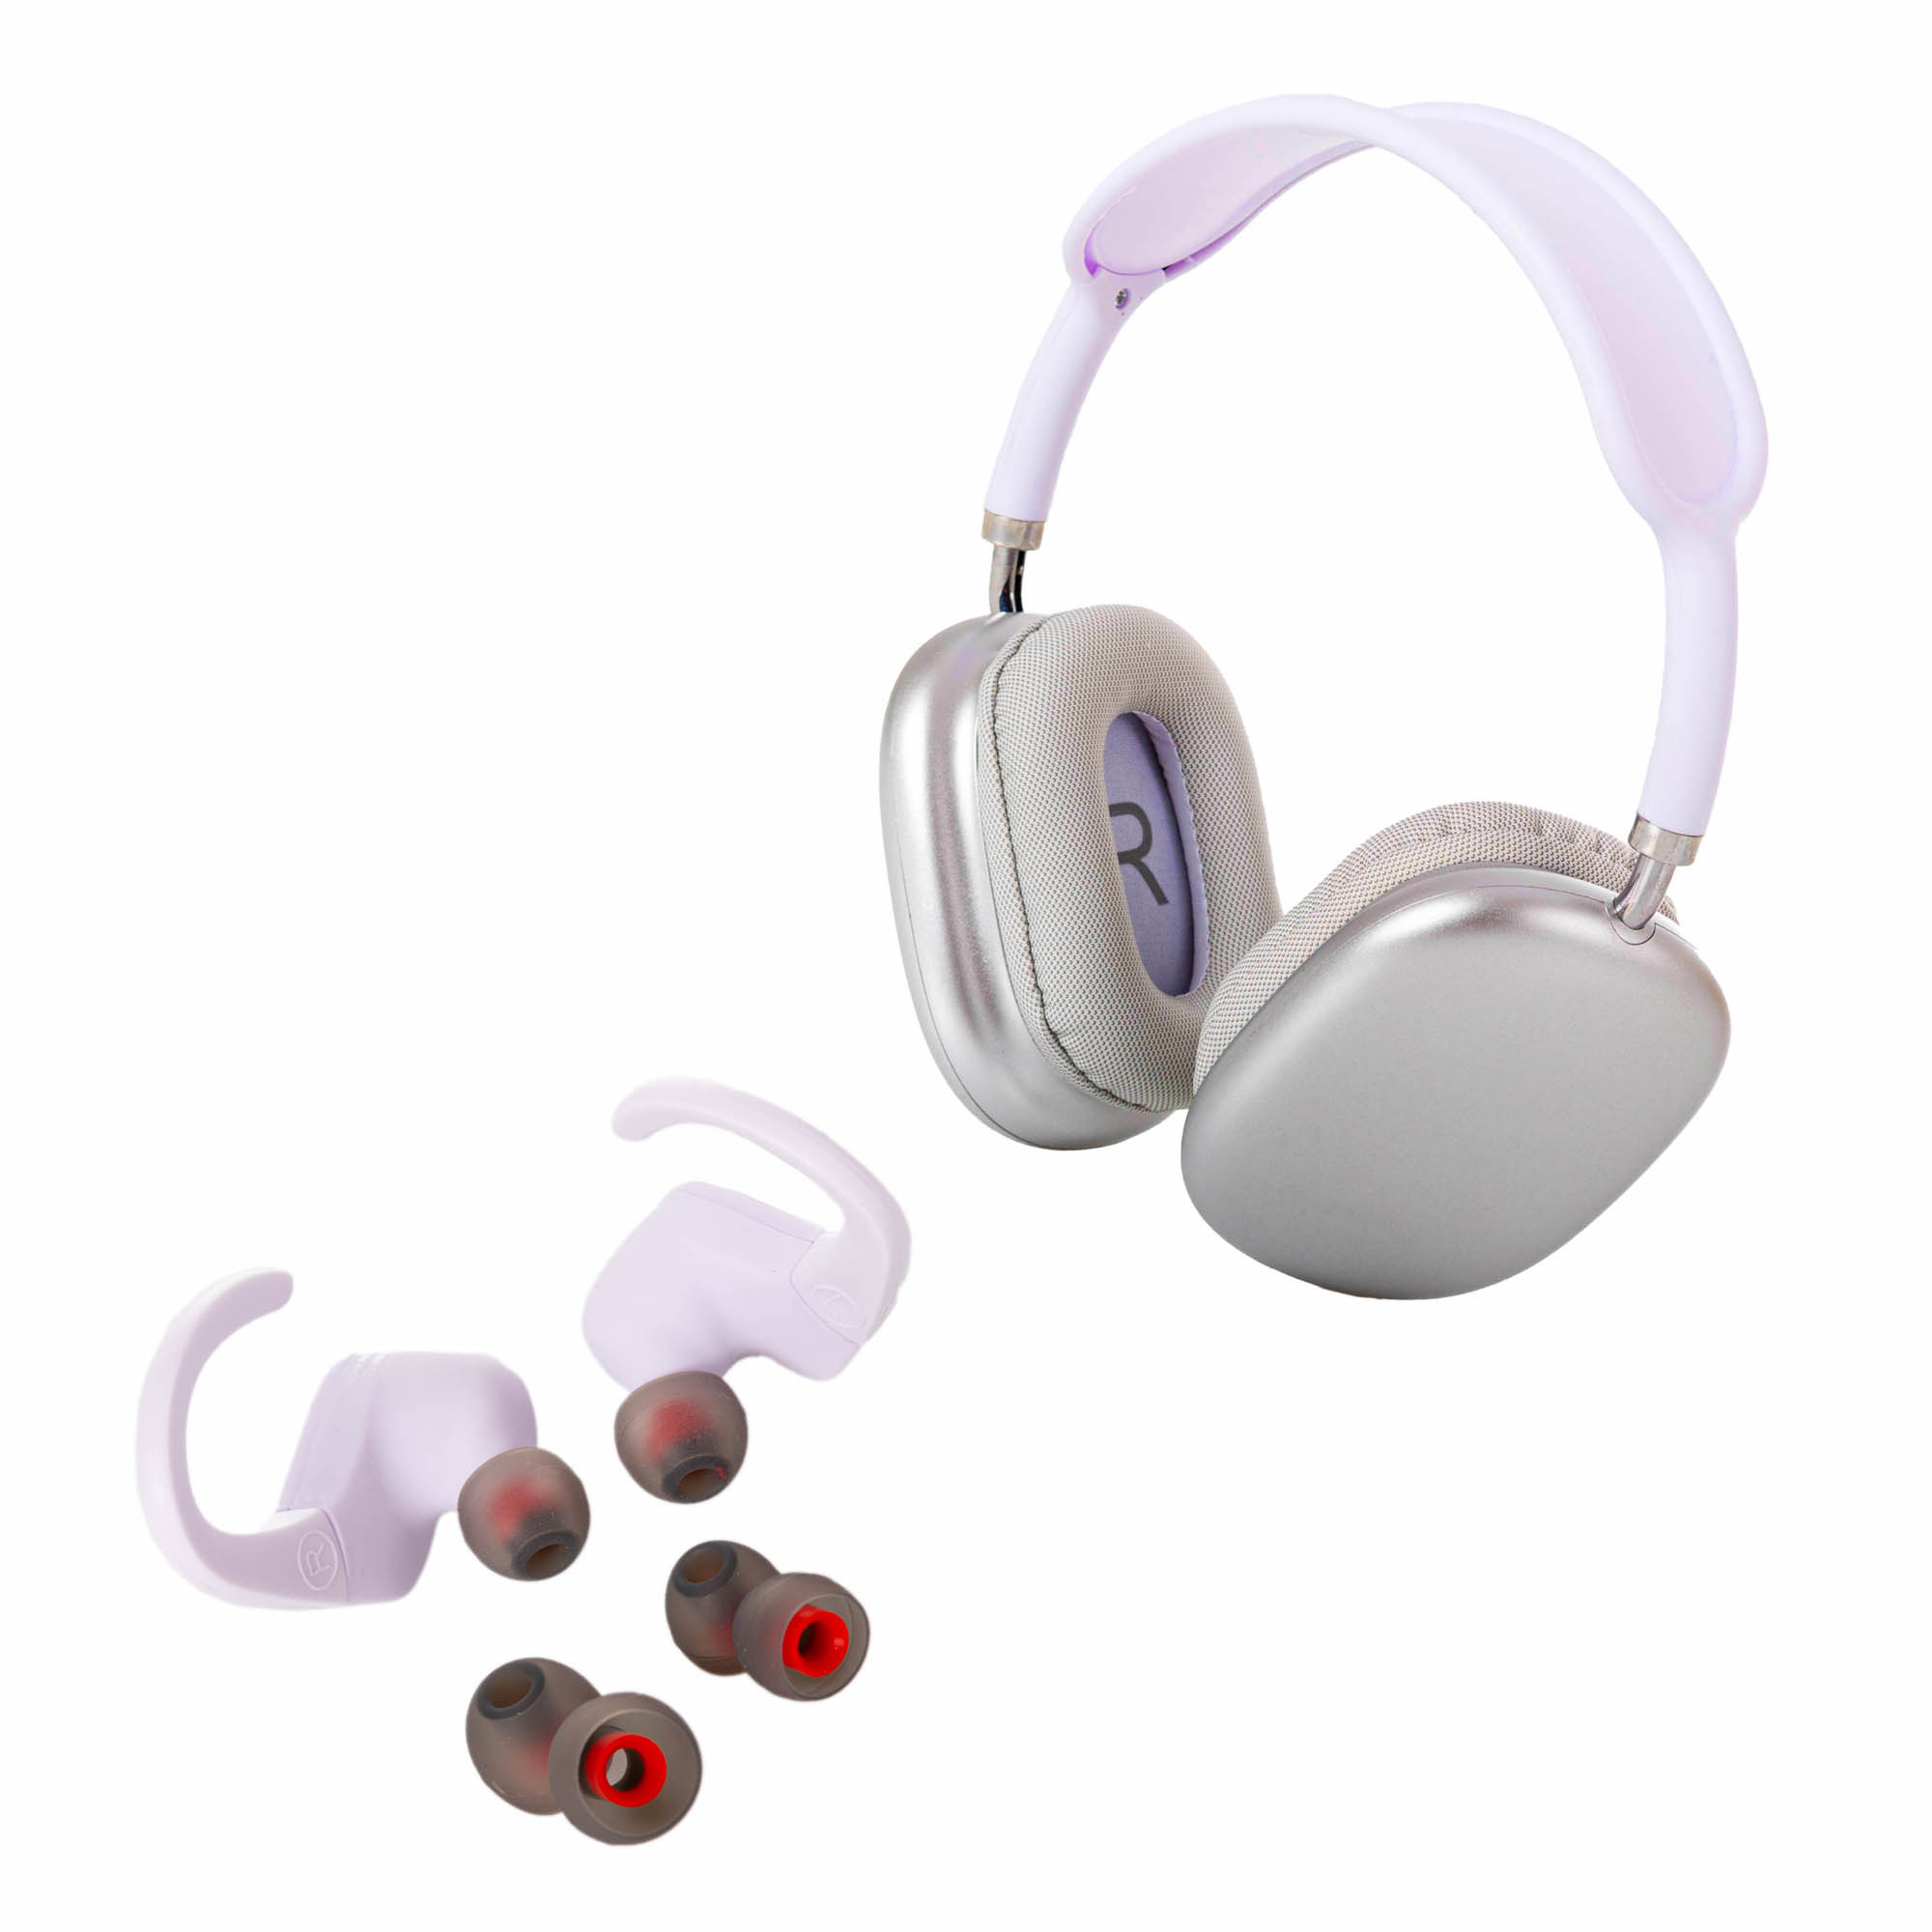 https://www.todohogar.com/261971/coby-audifonos-inalambricos-bluetooth-diadema-in-ear-deportivos-cmb134-recargable-con-microfono-y-compatible-con-google-siri.jpg